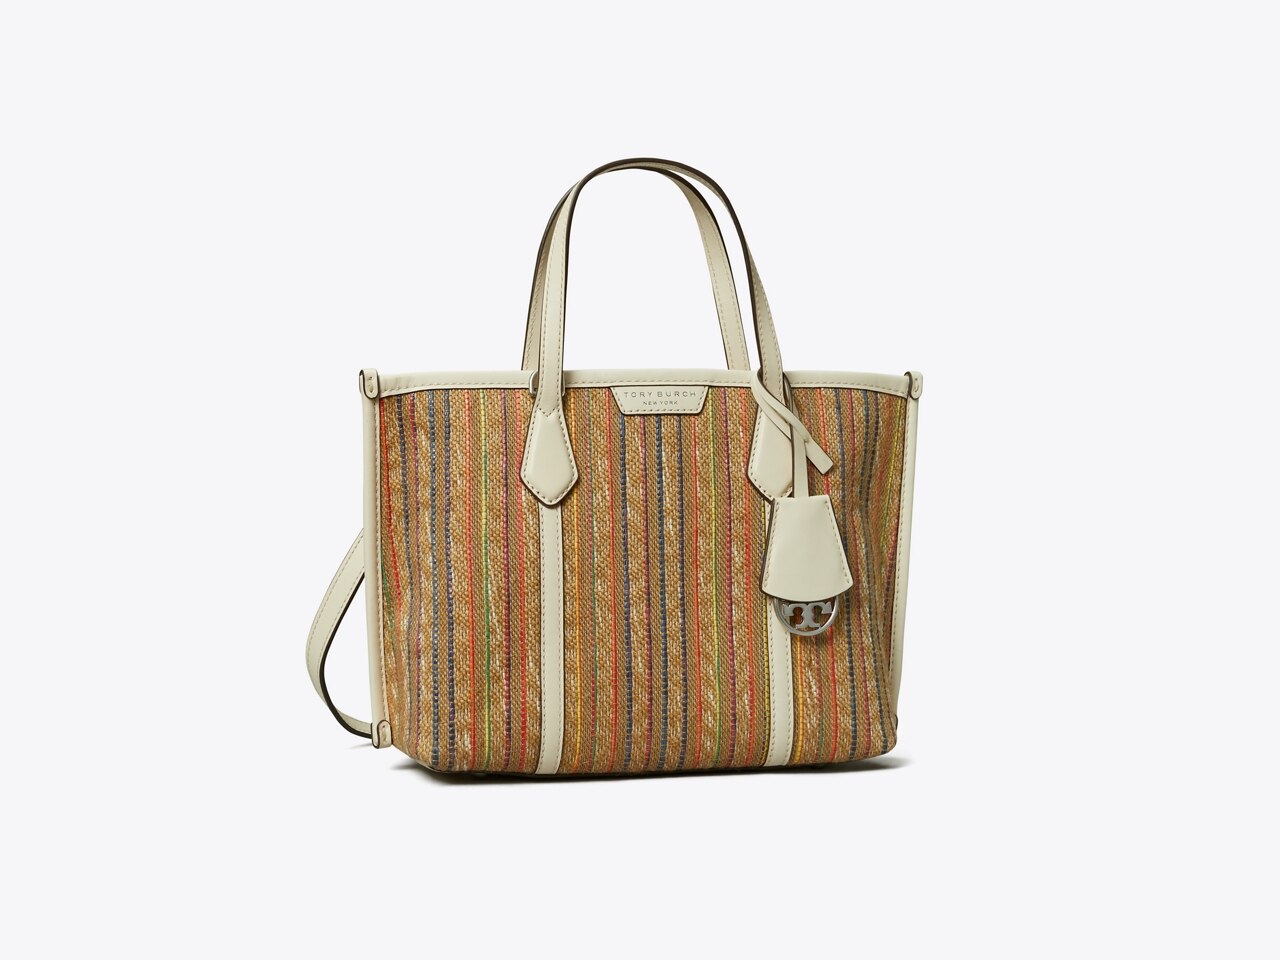 Mini Perry Raffia Stripe Tote: Women's Handbags, Crossbody Bags